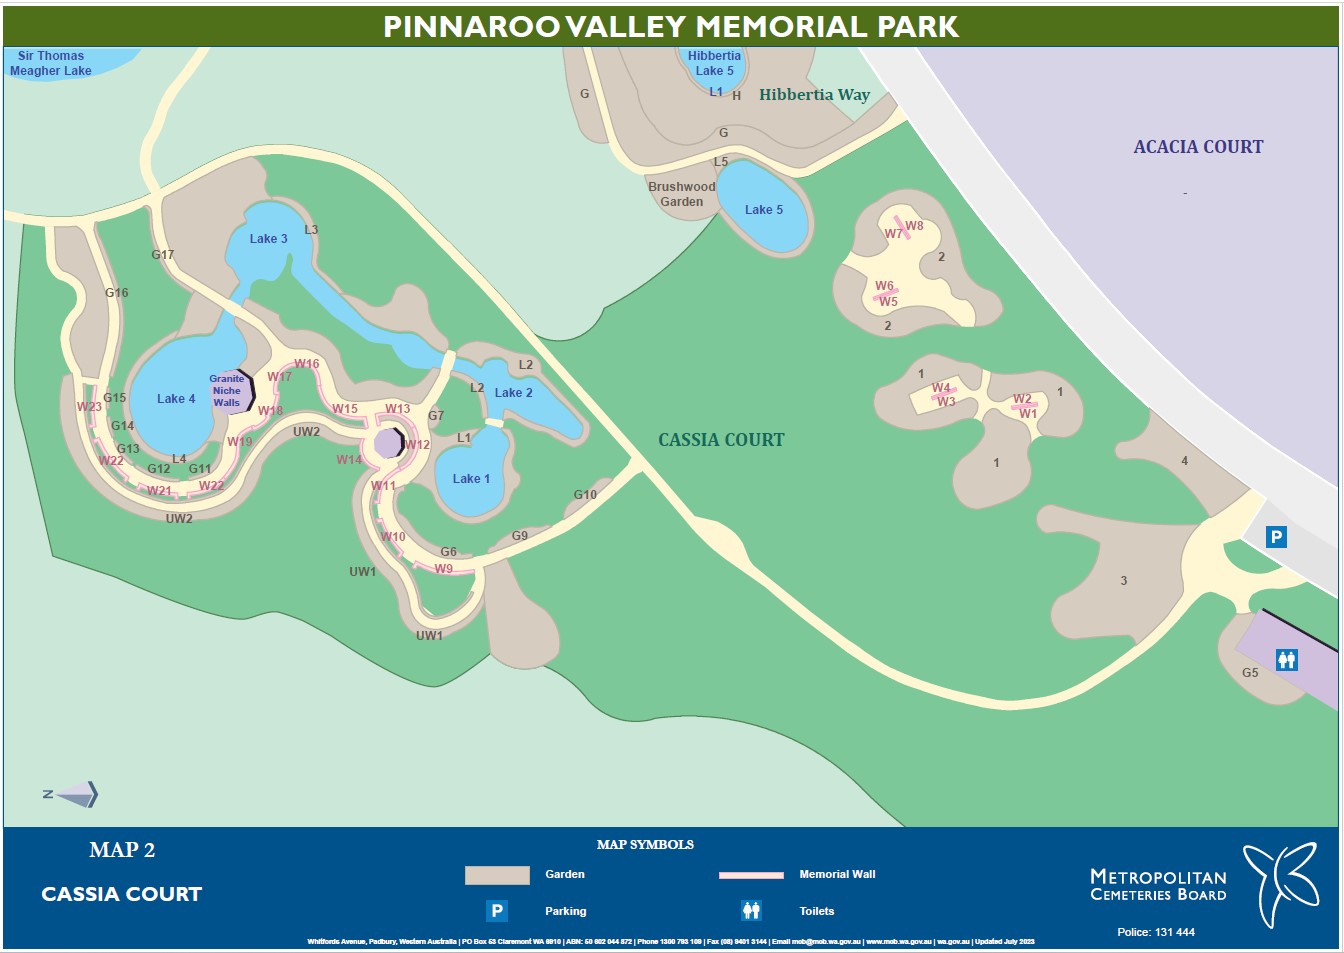 Map 2 Cassia Court Pinnaroo Valley Memorial Park